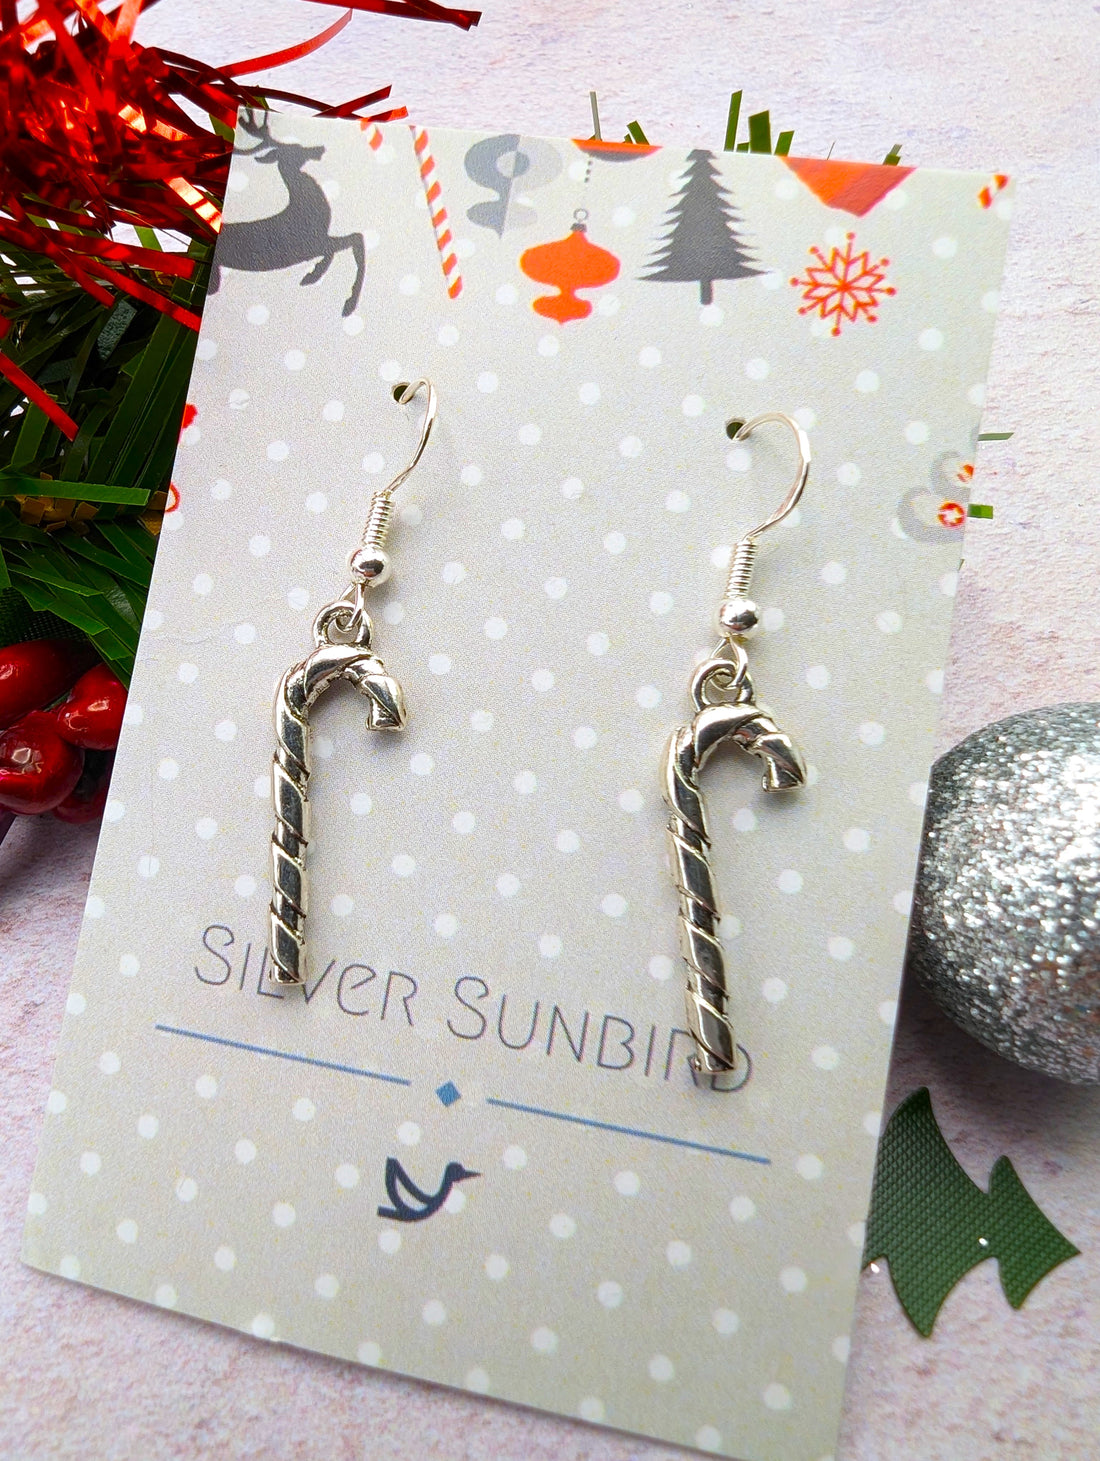 Classic Candy Cane Earrings - Silver Sunbird Christmas Earrings